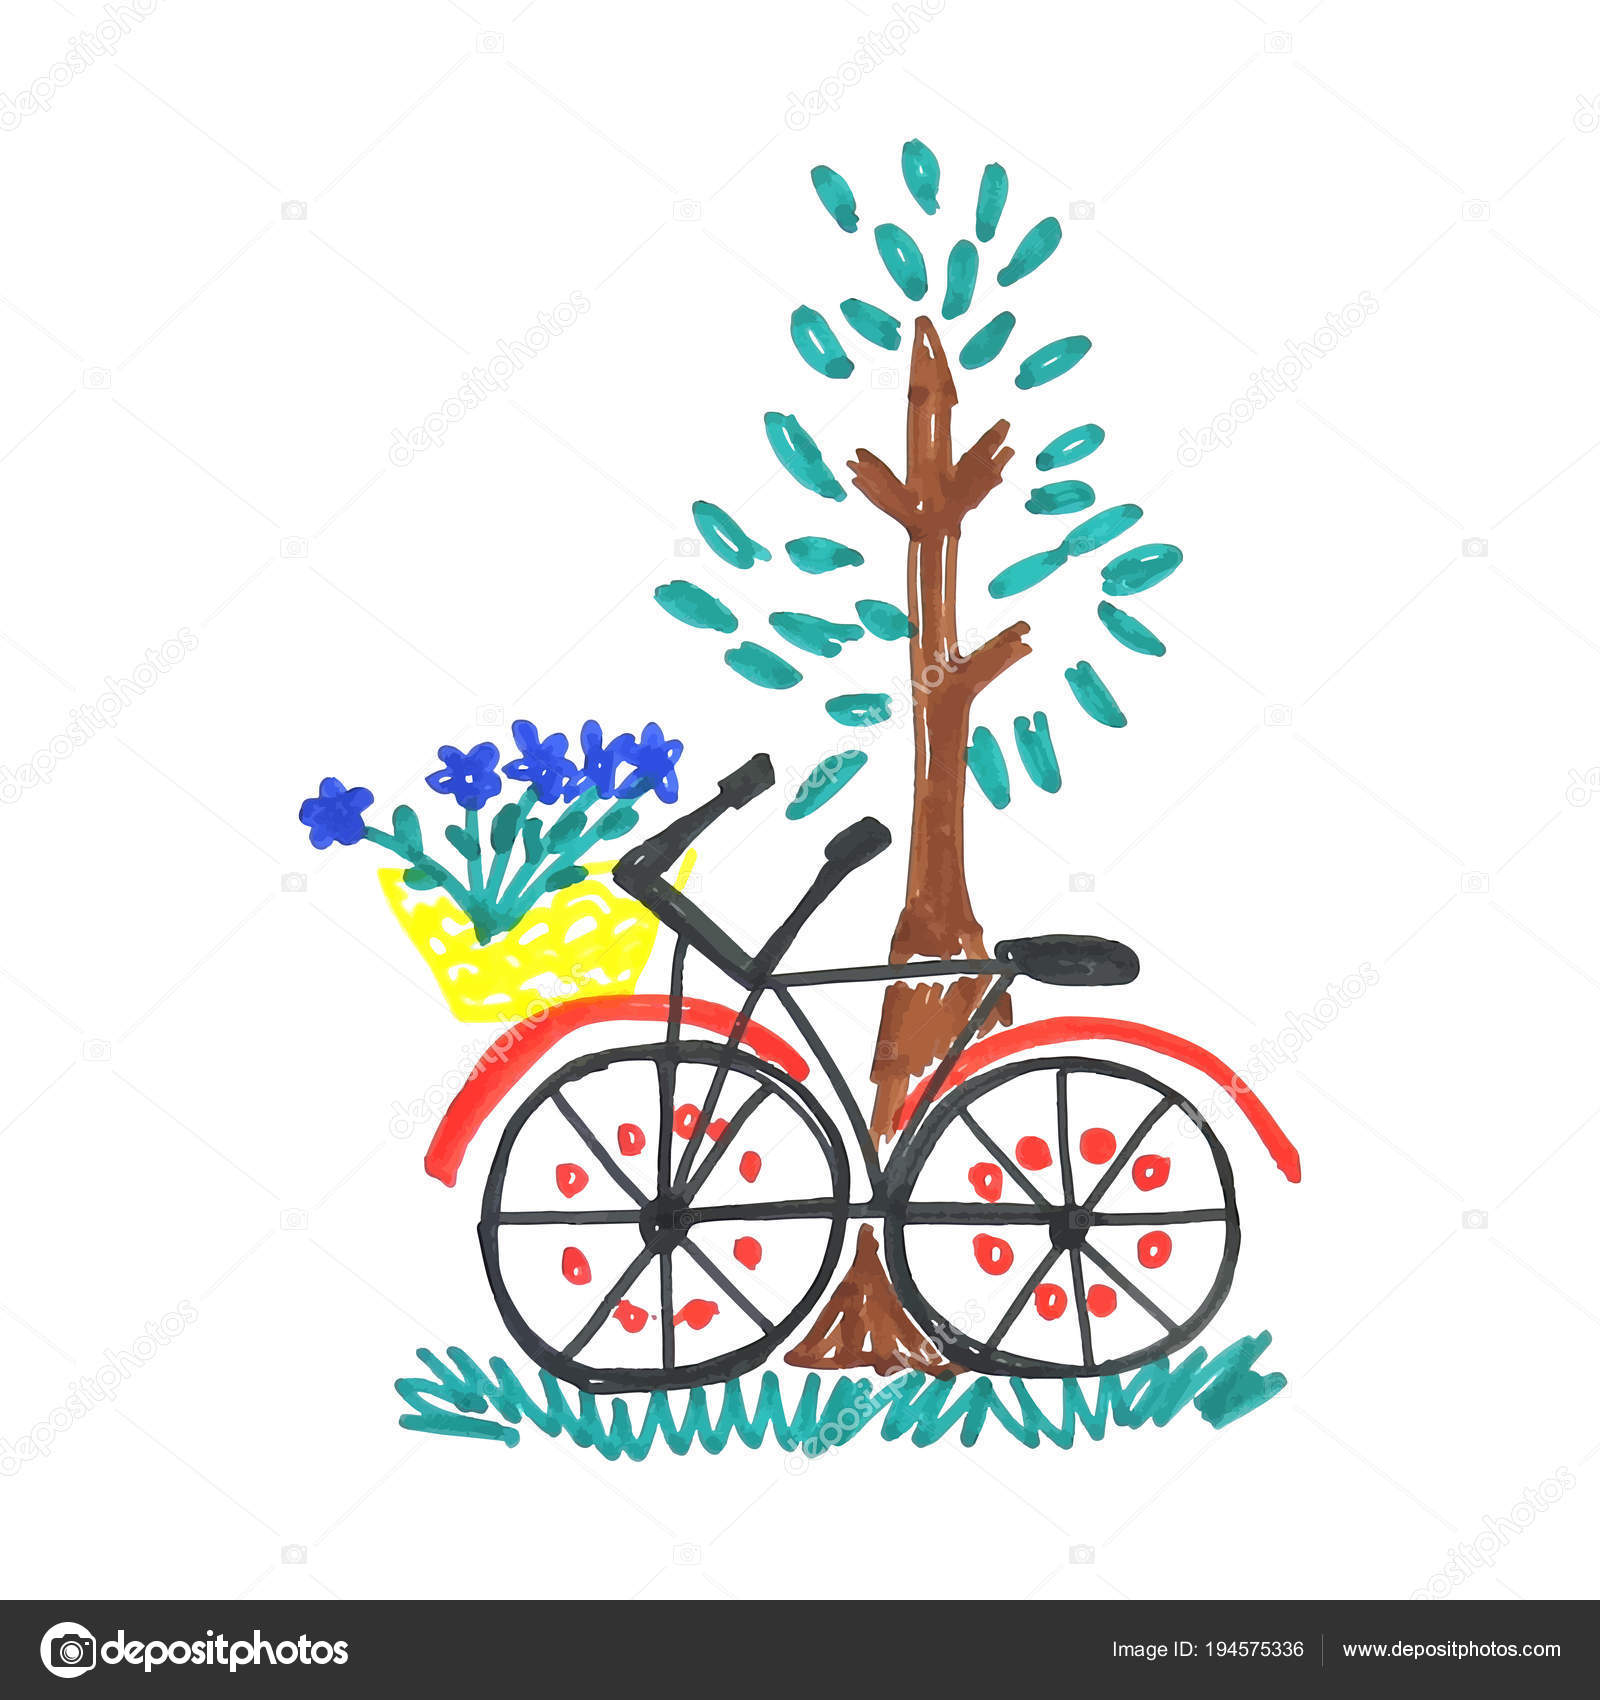 Chico garabato de bicicleta con flores azules en cesta floral cerca del  árbol con hojas aisladas sobre fondo blanco . Vector de stock por  ©RoJDesign 194575336